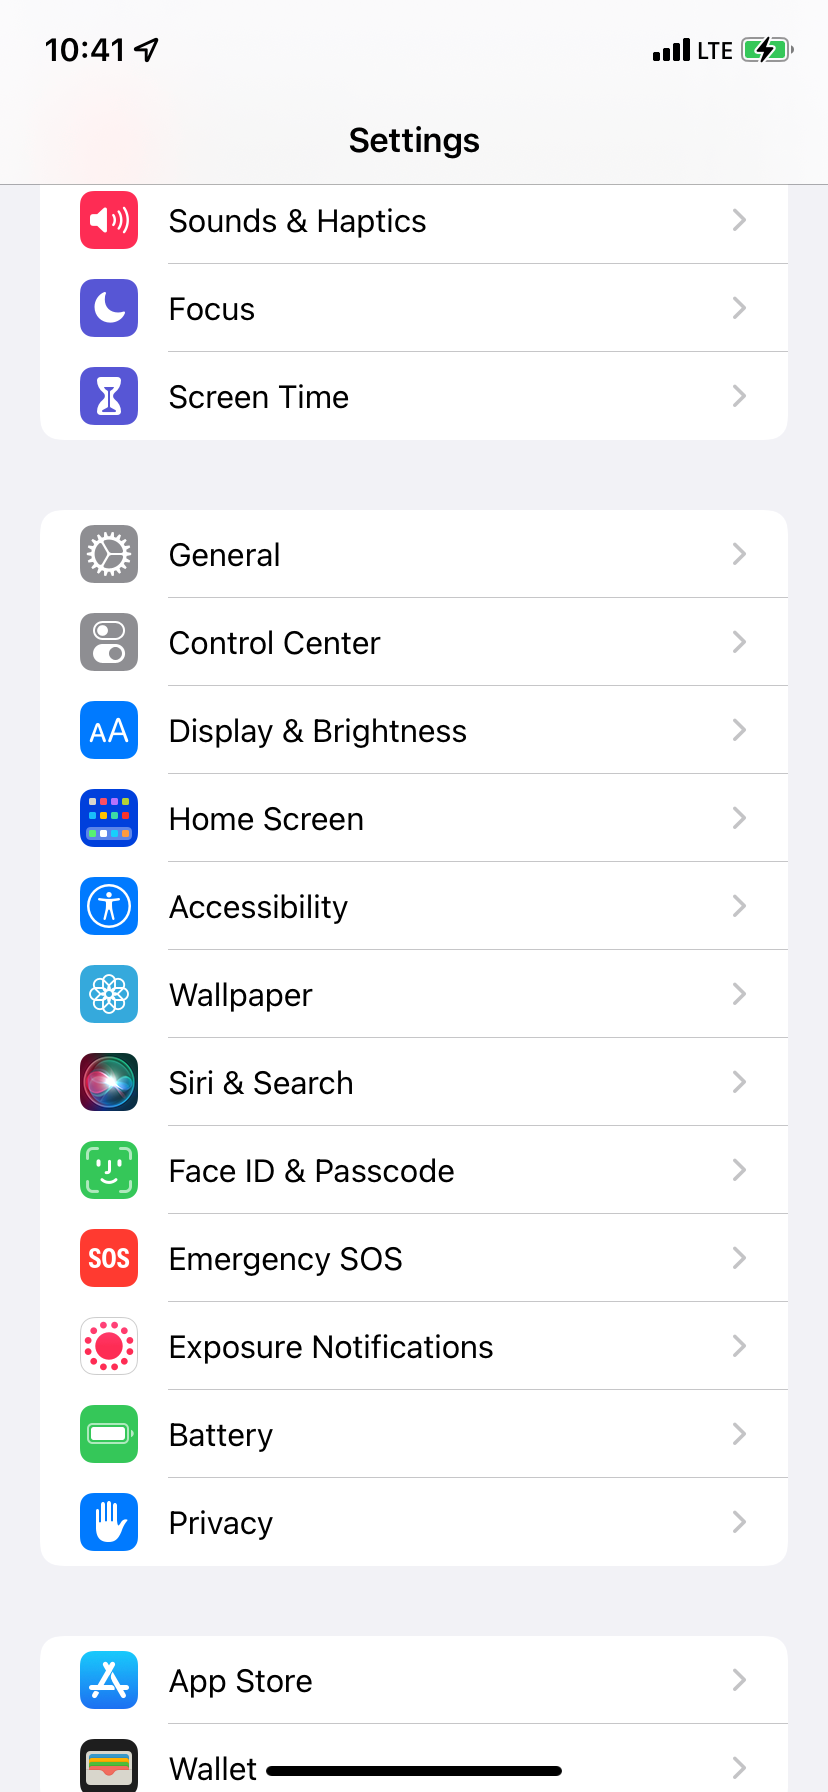 iPhone Settings showing Siri & Search